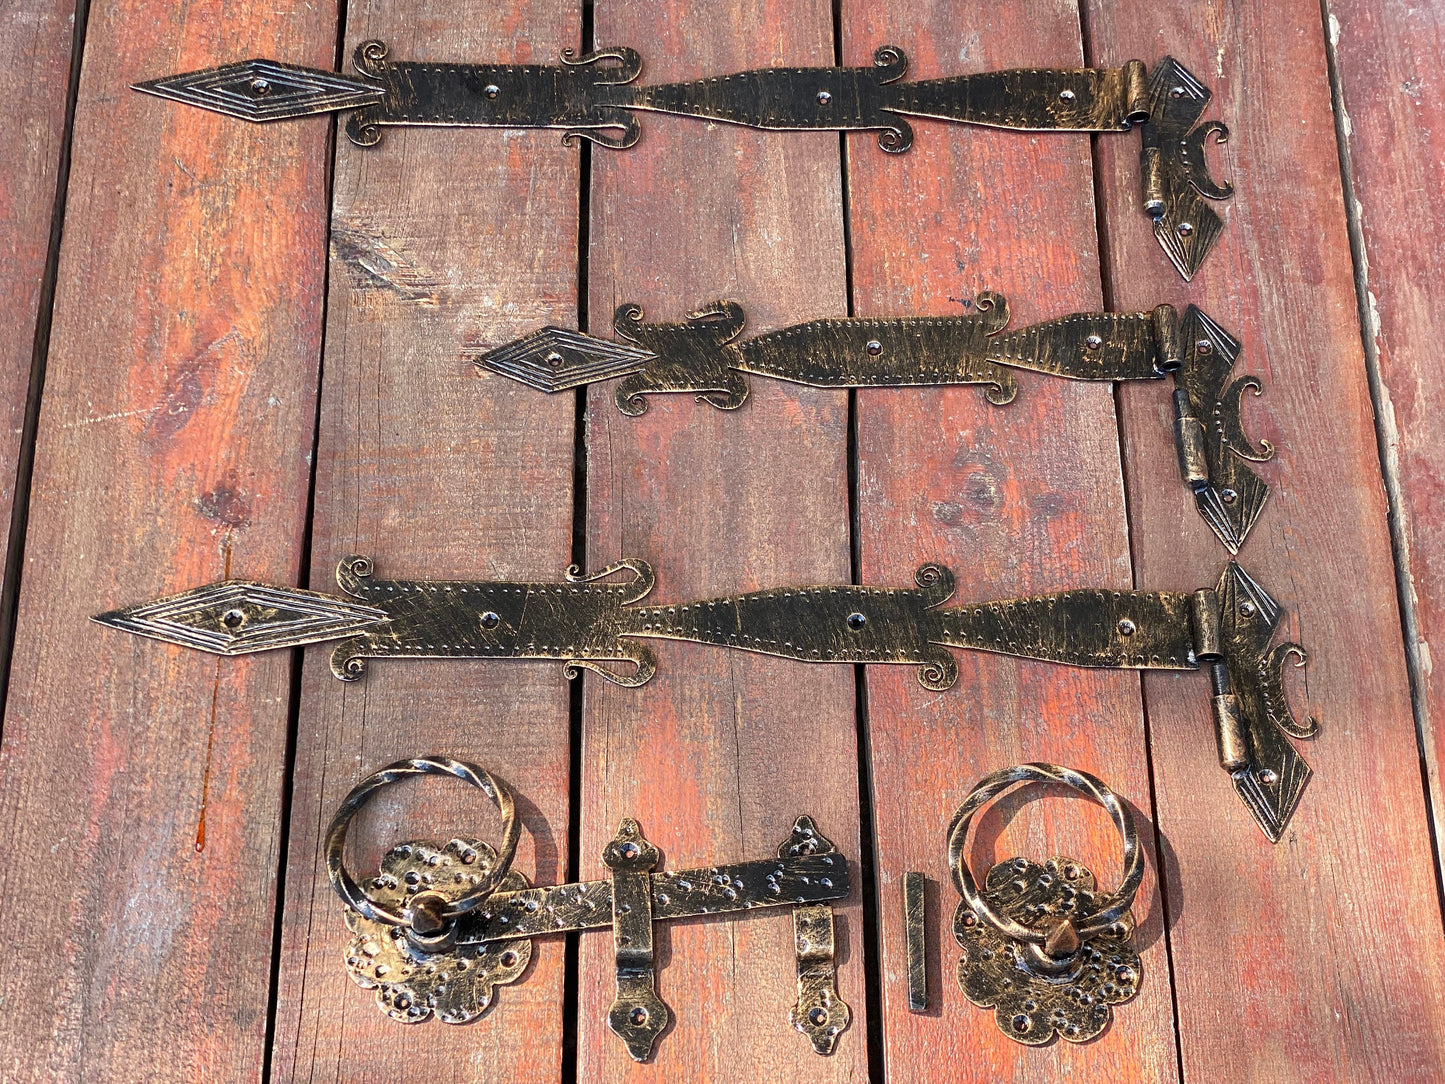 Ring gate latch, latch, gate hardware, door hardware, door handle, blacksmith, medieval, garden, yard, Christmas, DIY,anniversary,midcentury